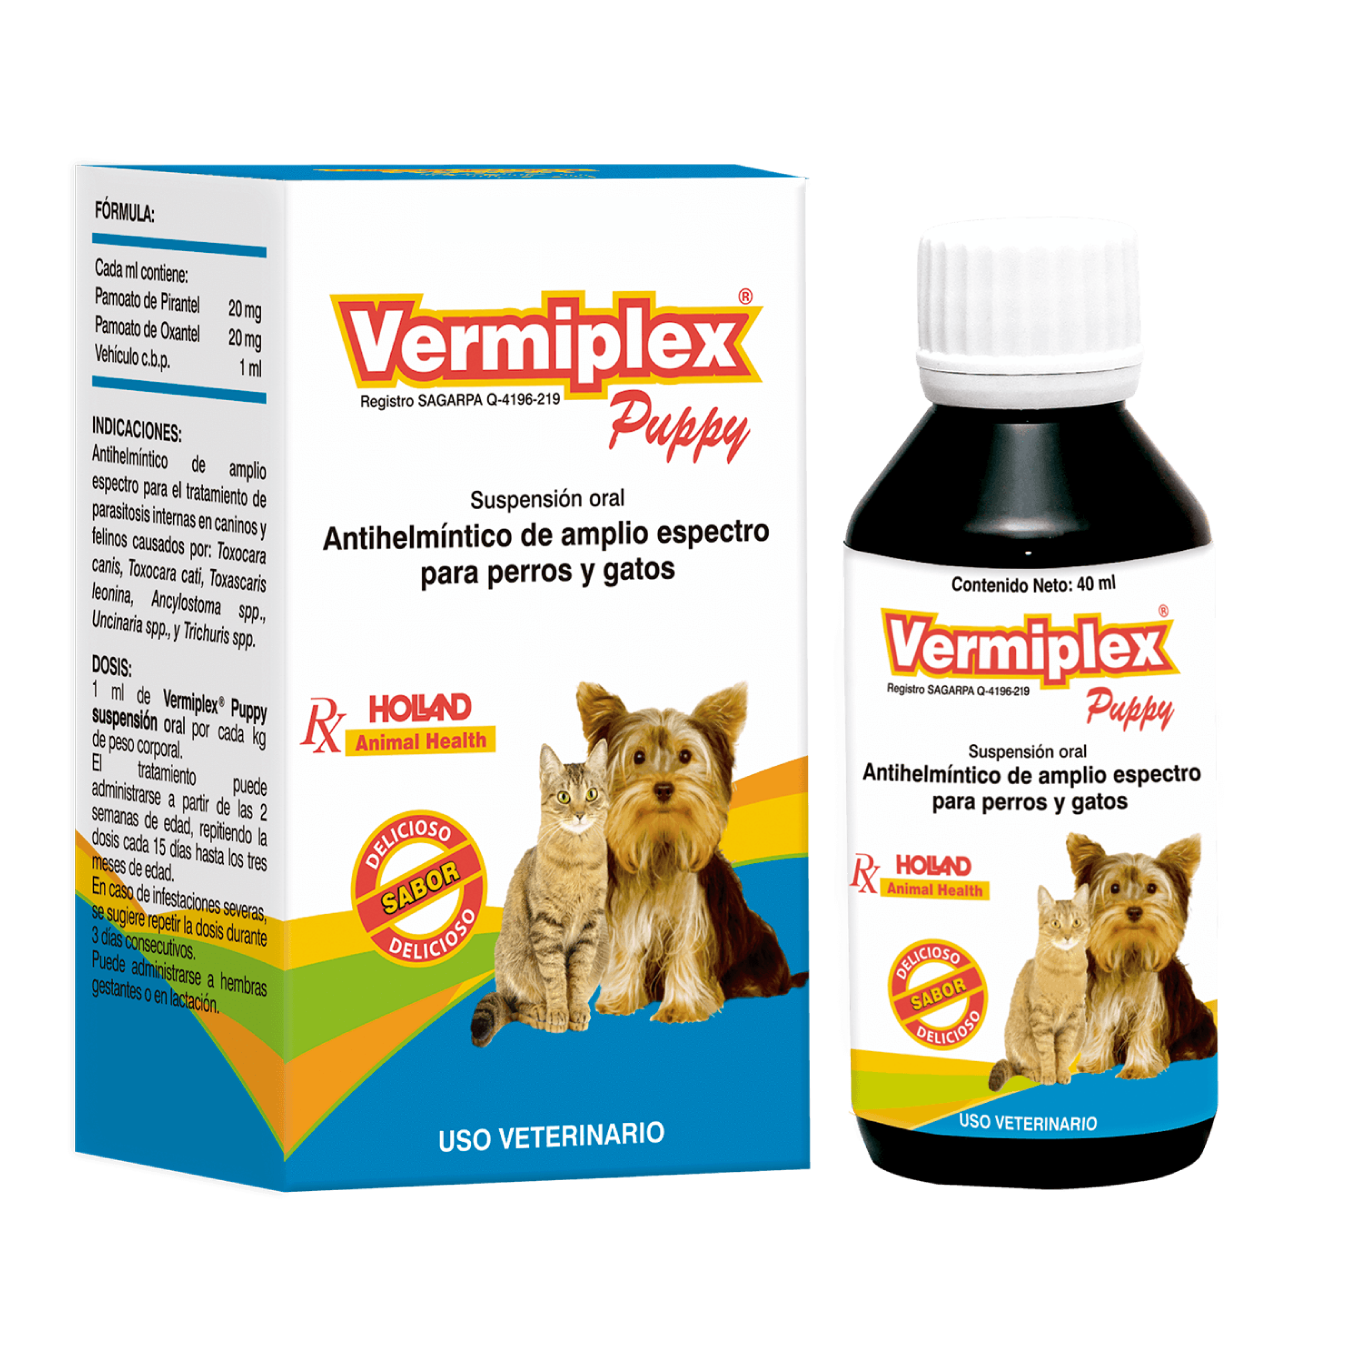 vermiplex plus puppy 40 ml holland suspension oral,